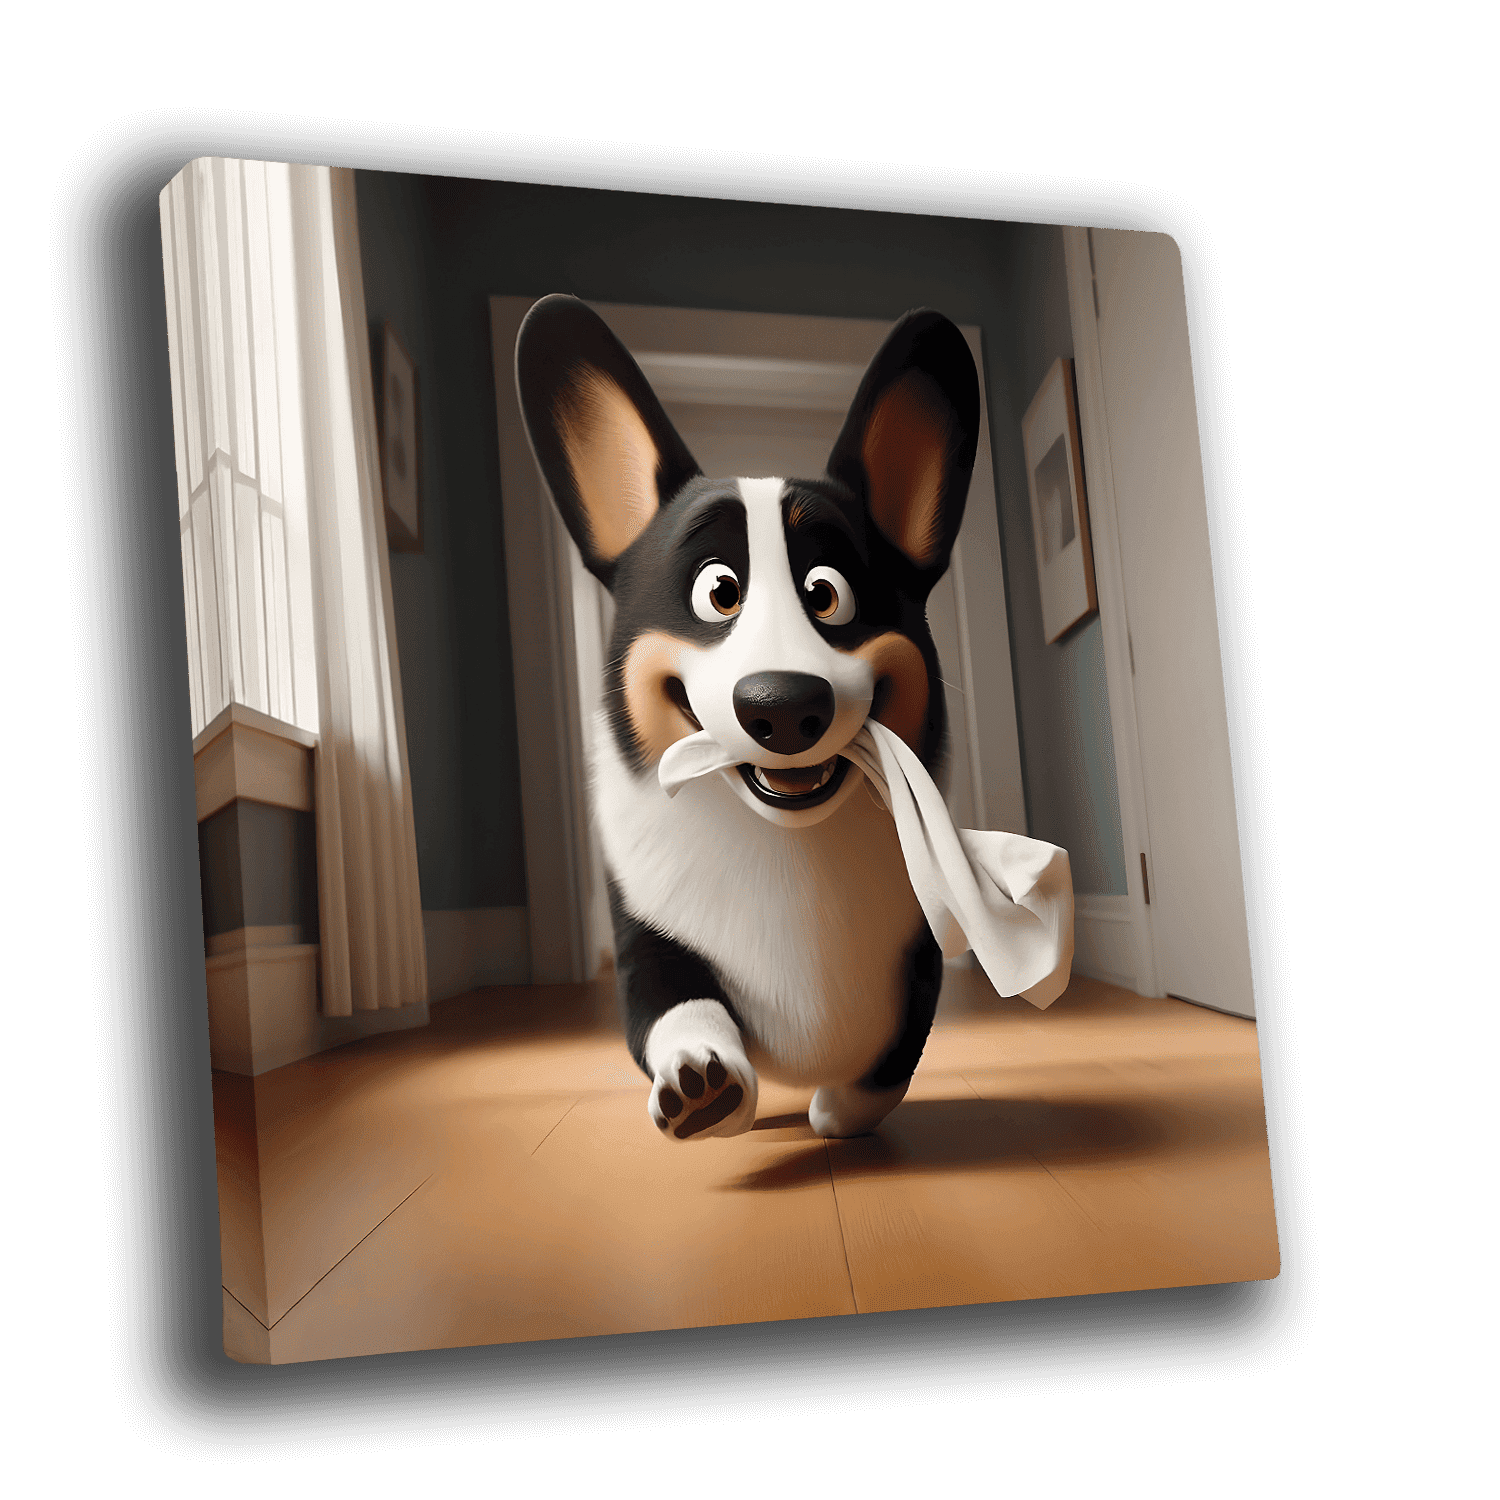 Animated Corgi Dog pixar style canvas art